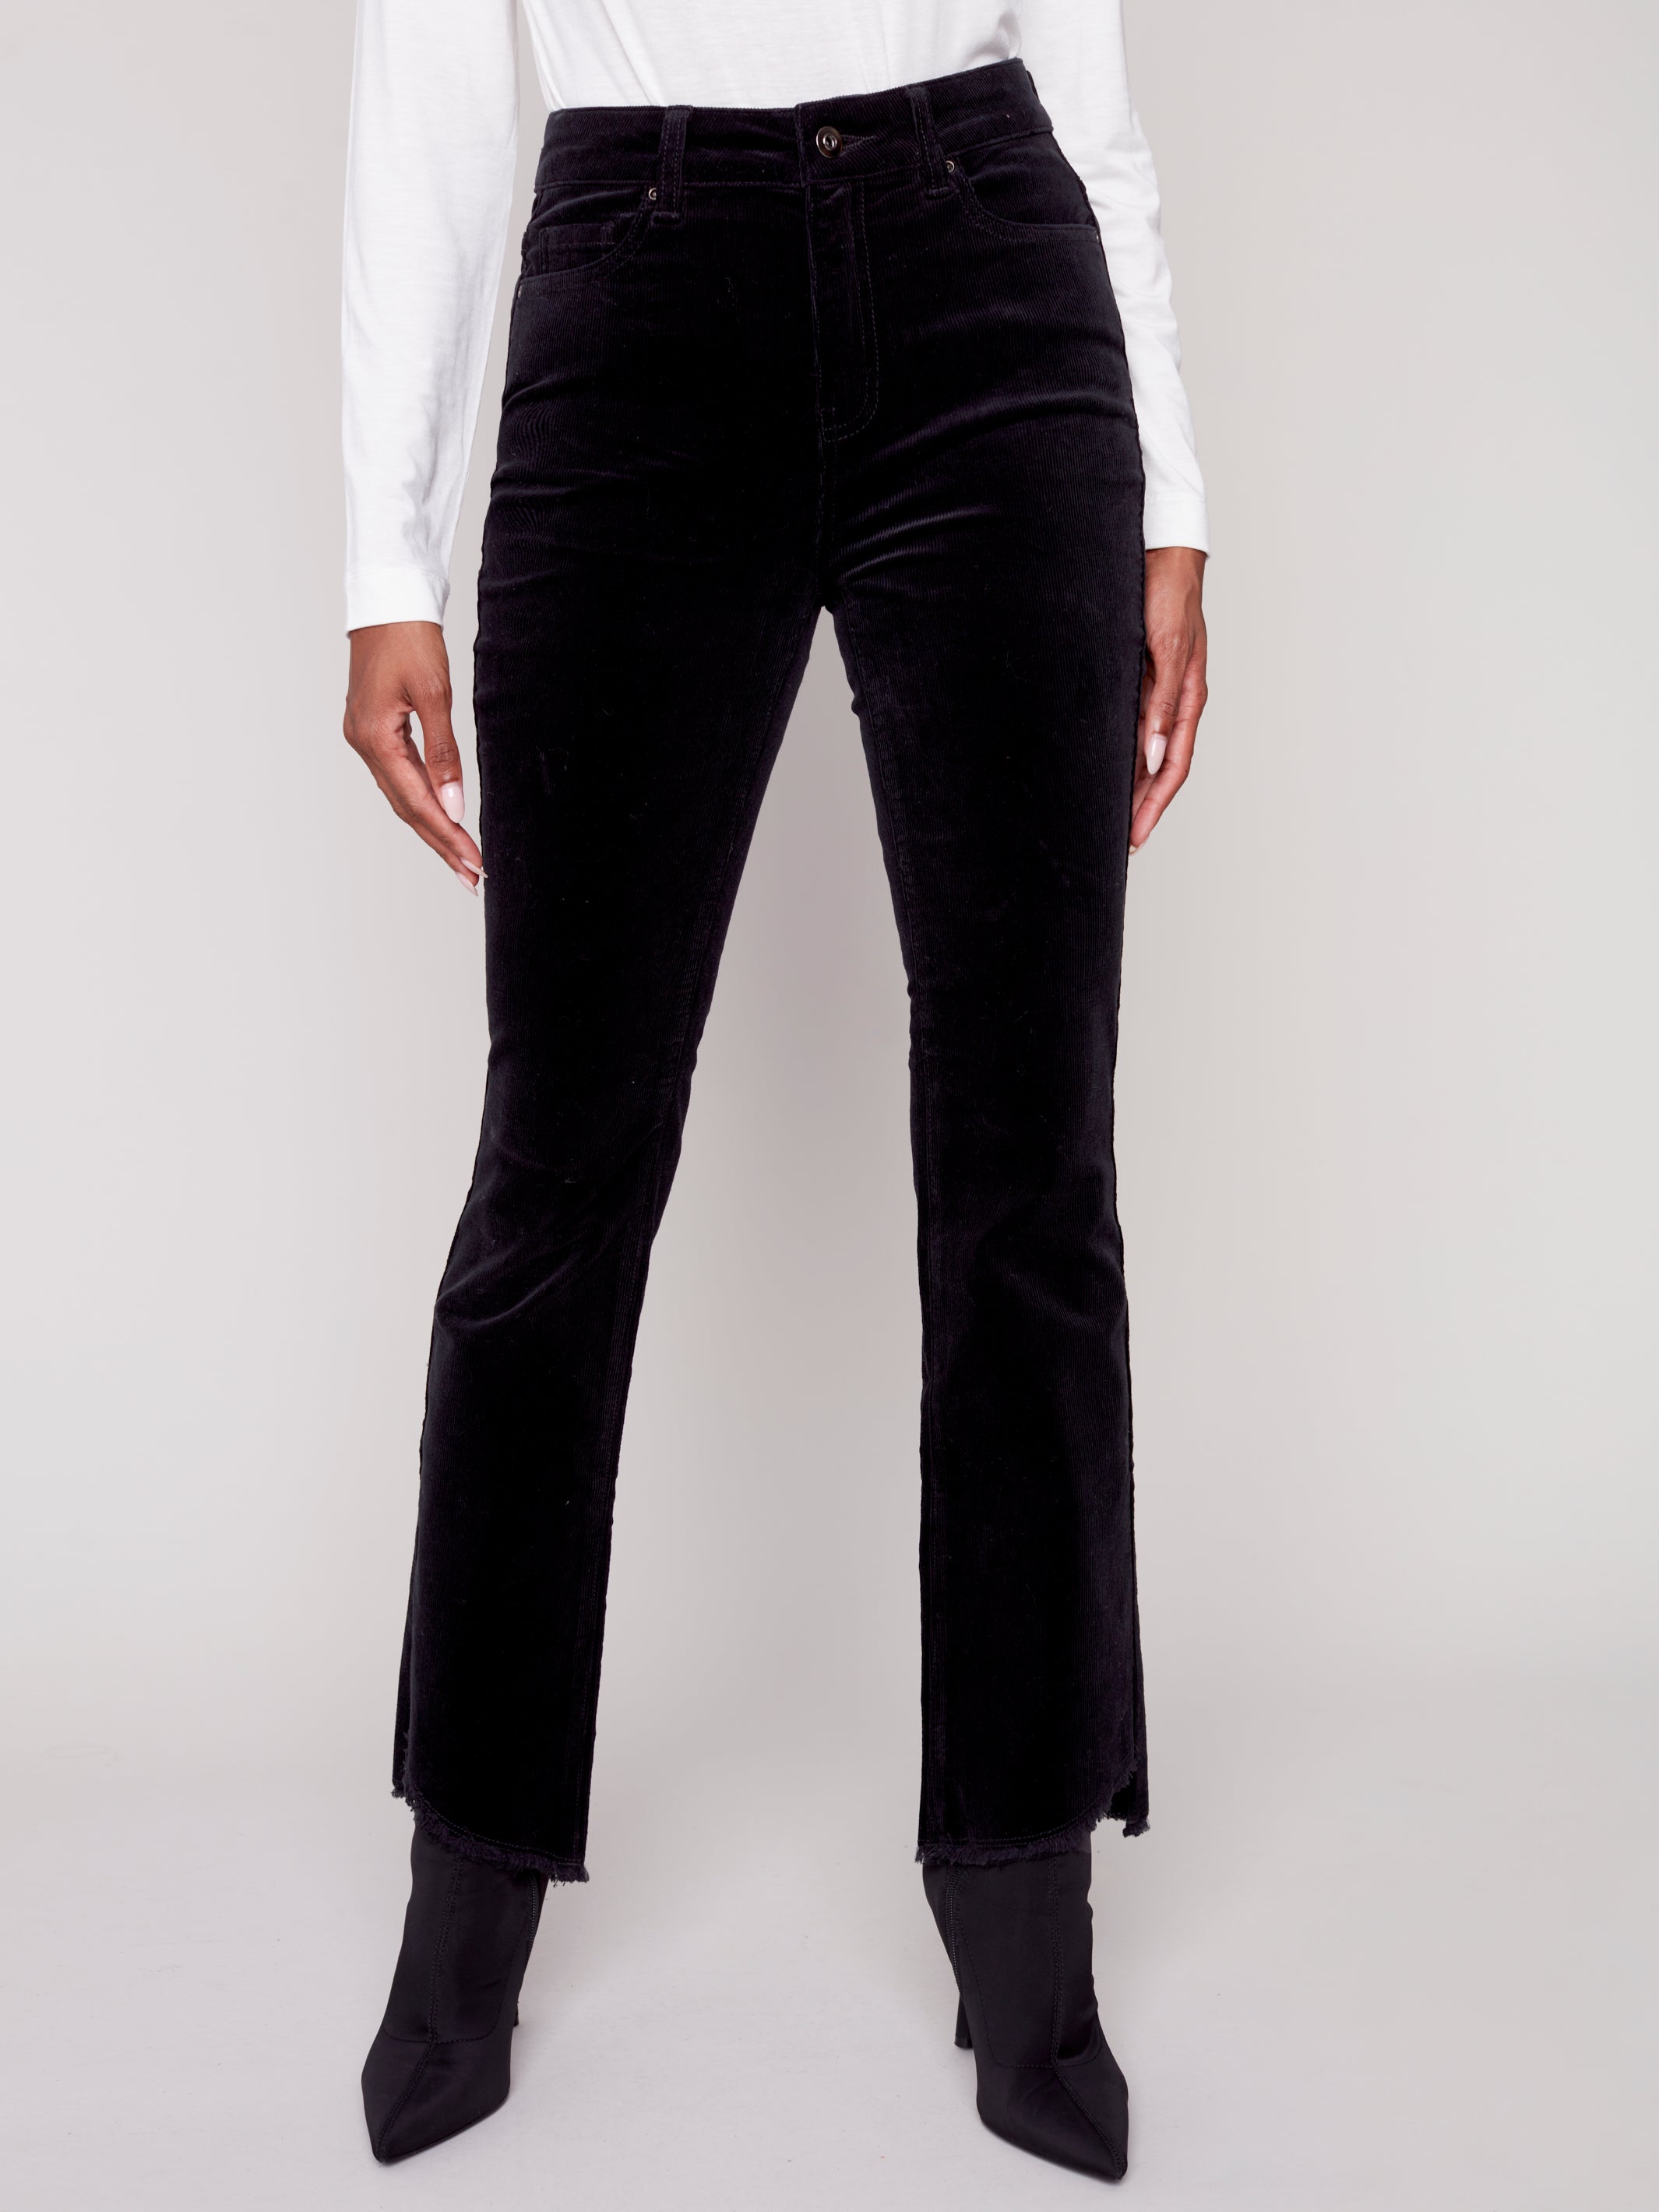 Charlie B Bootcut Corduroy Pants with Asymmetrical Fringed Hem - Black